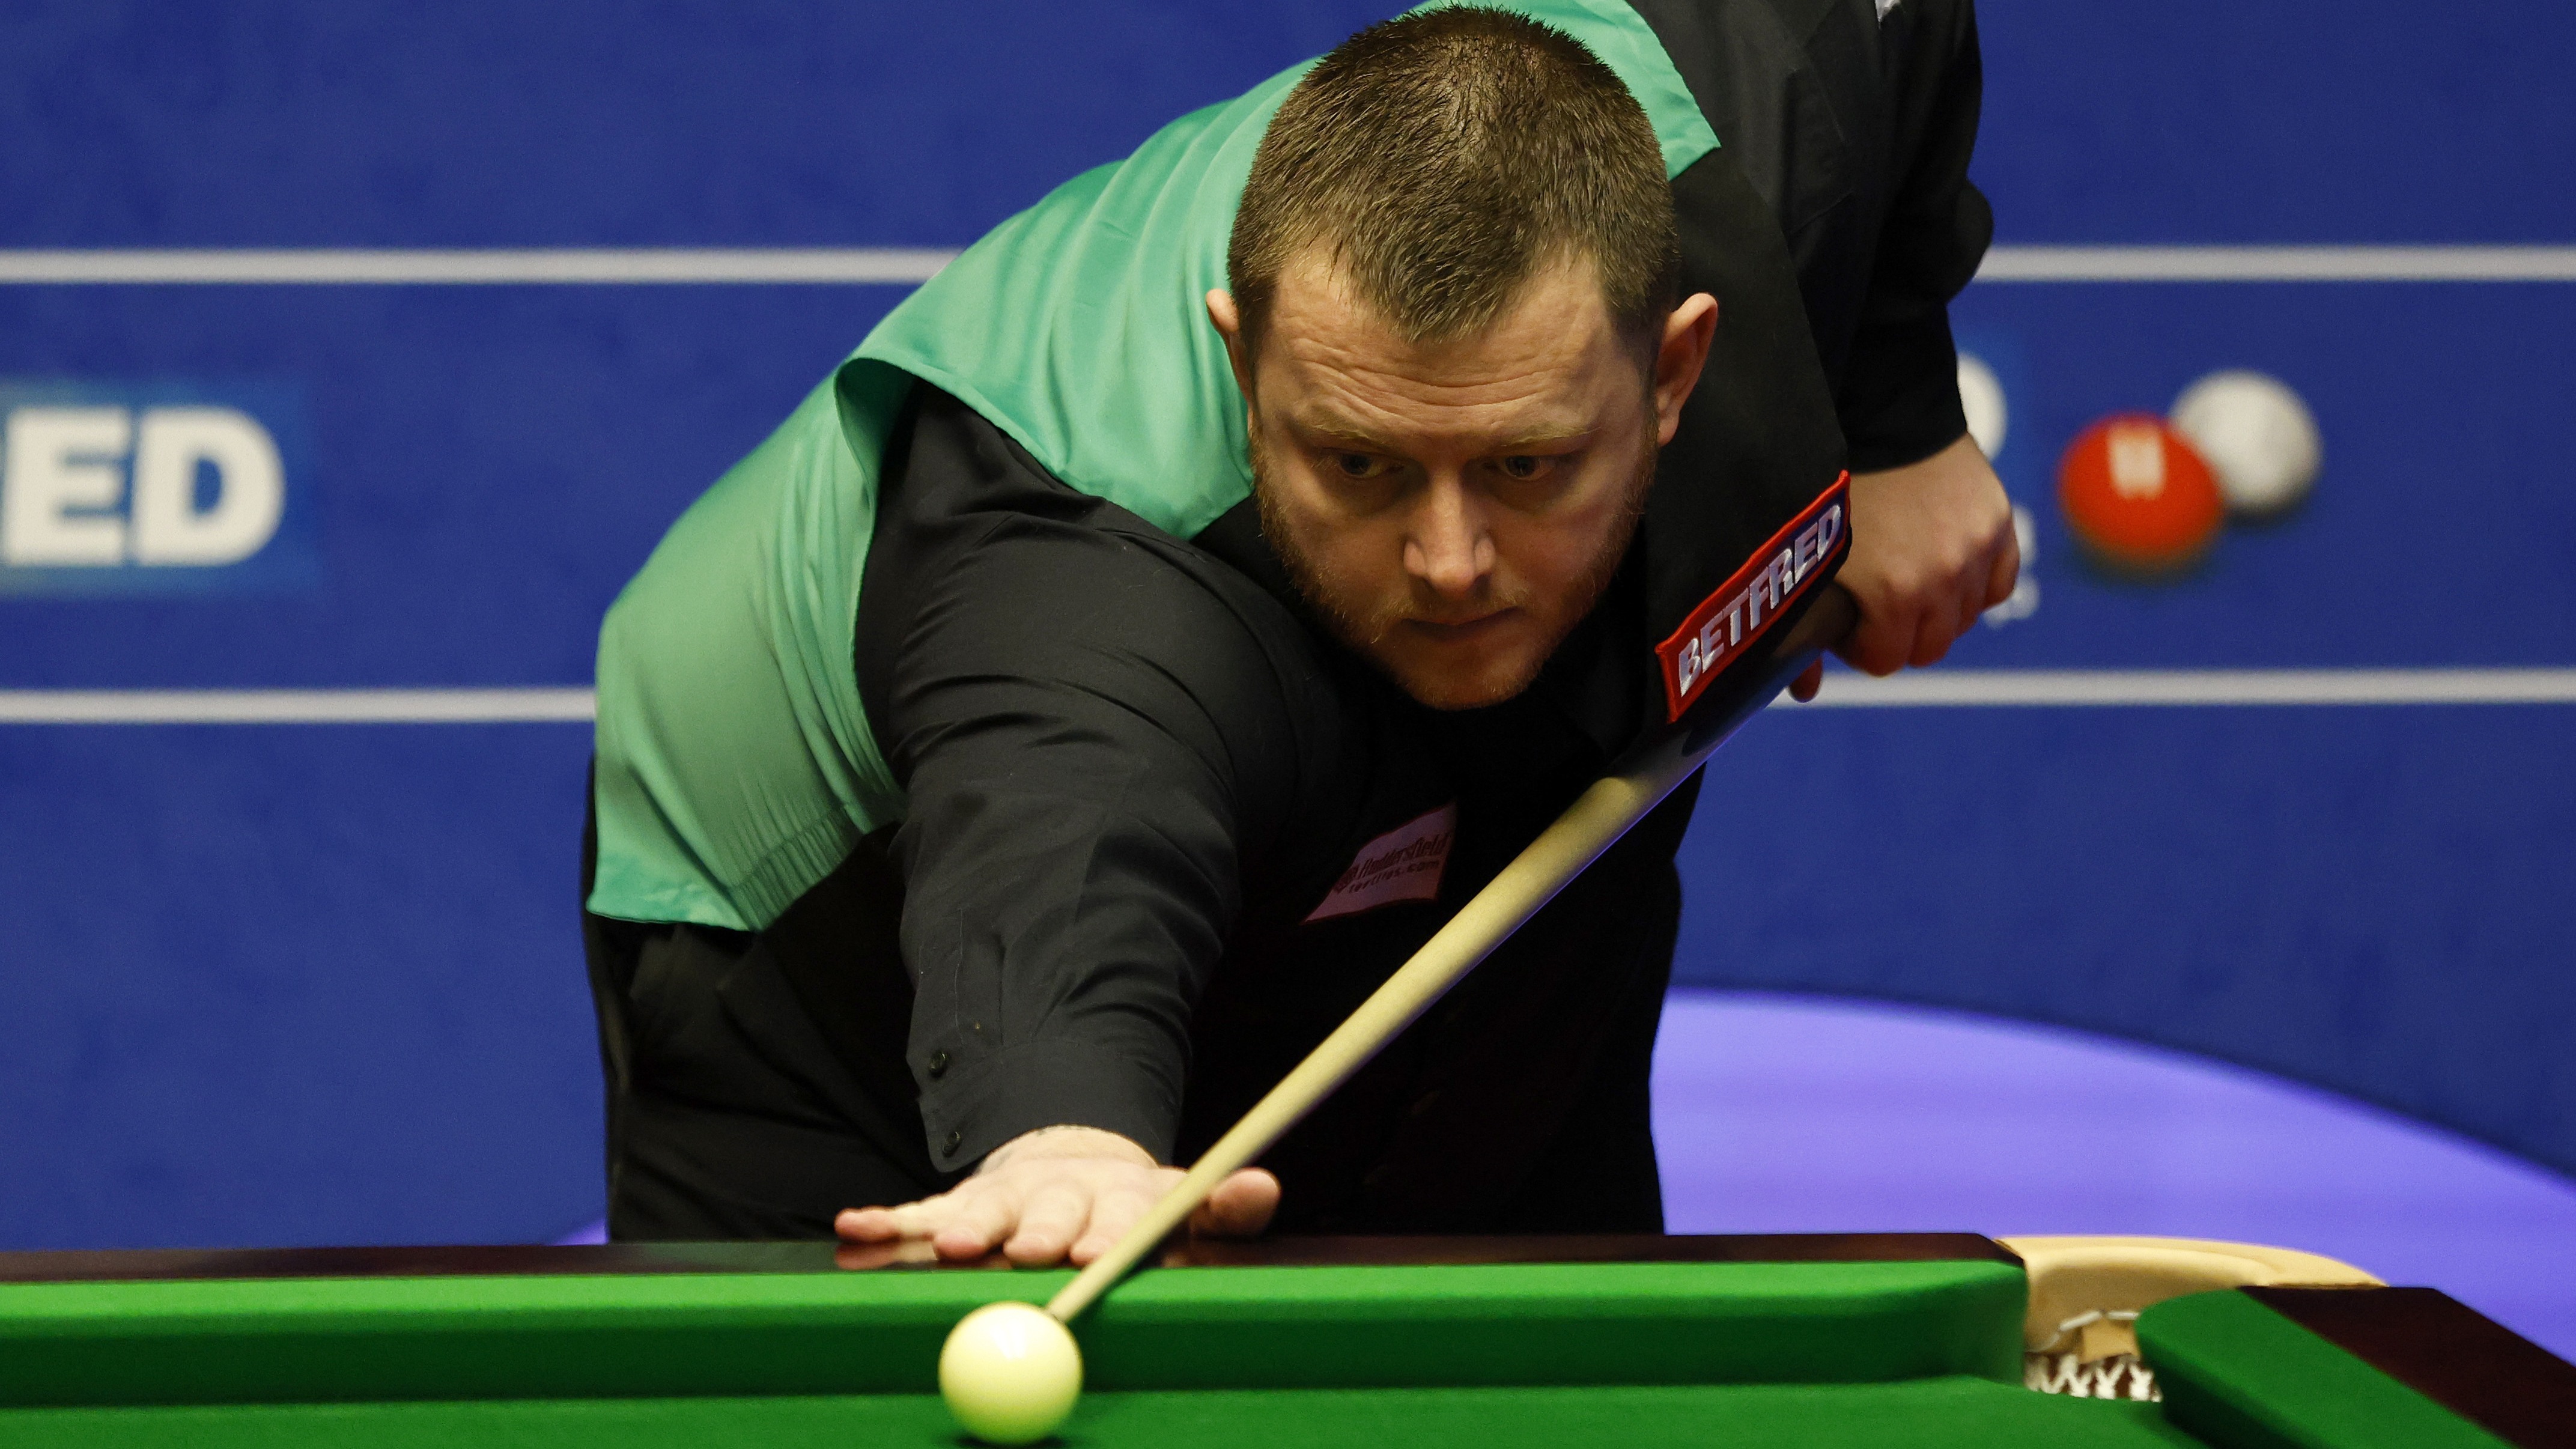 Antrims Mark Allen to face Ronnie OSullivan in next round of World Snooker Championship UTV ITV News